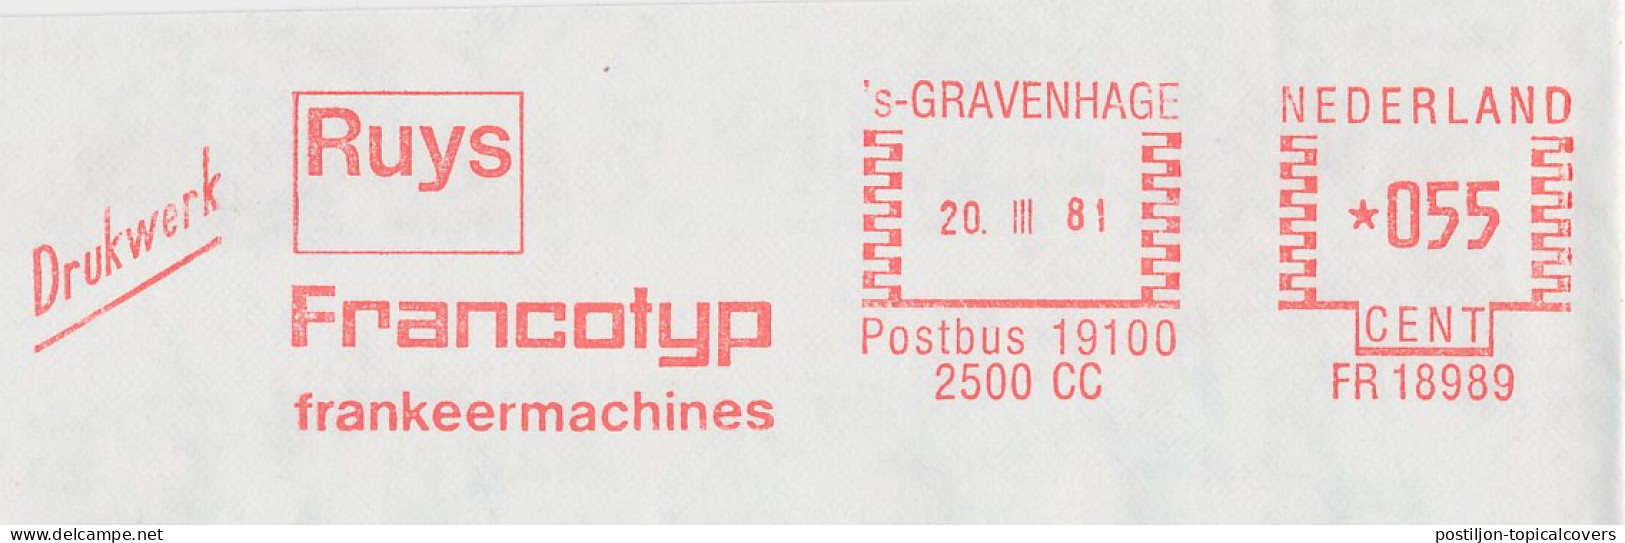 Meter Cover Netherlands 1981 Francotyp - The Hague - Automaatzegels [ATM]